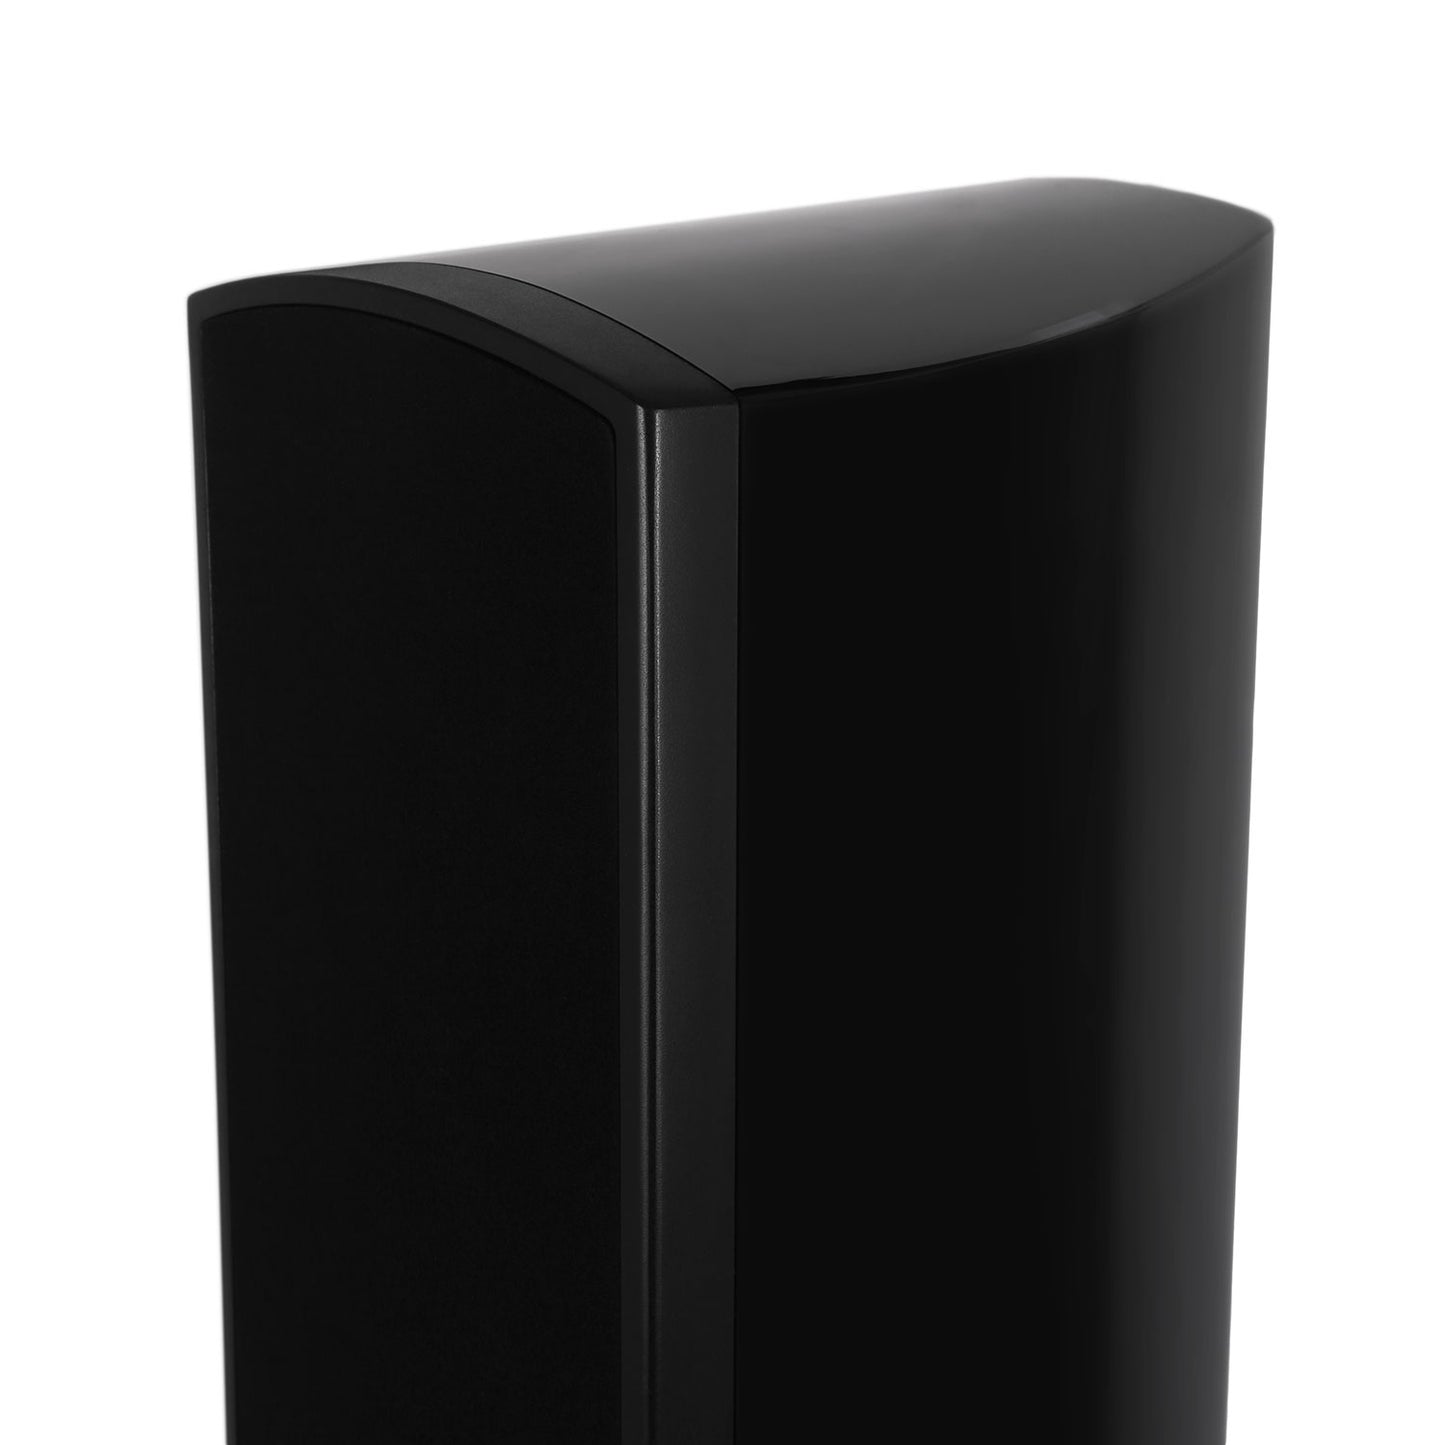 Open Box Verus V8T 3-Way Dual 8" Tower Speaker Single - Gloss Black